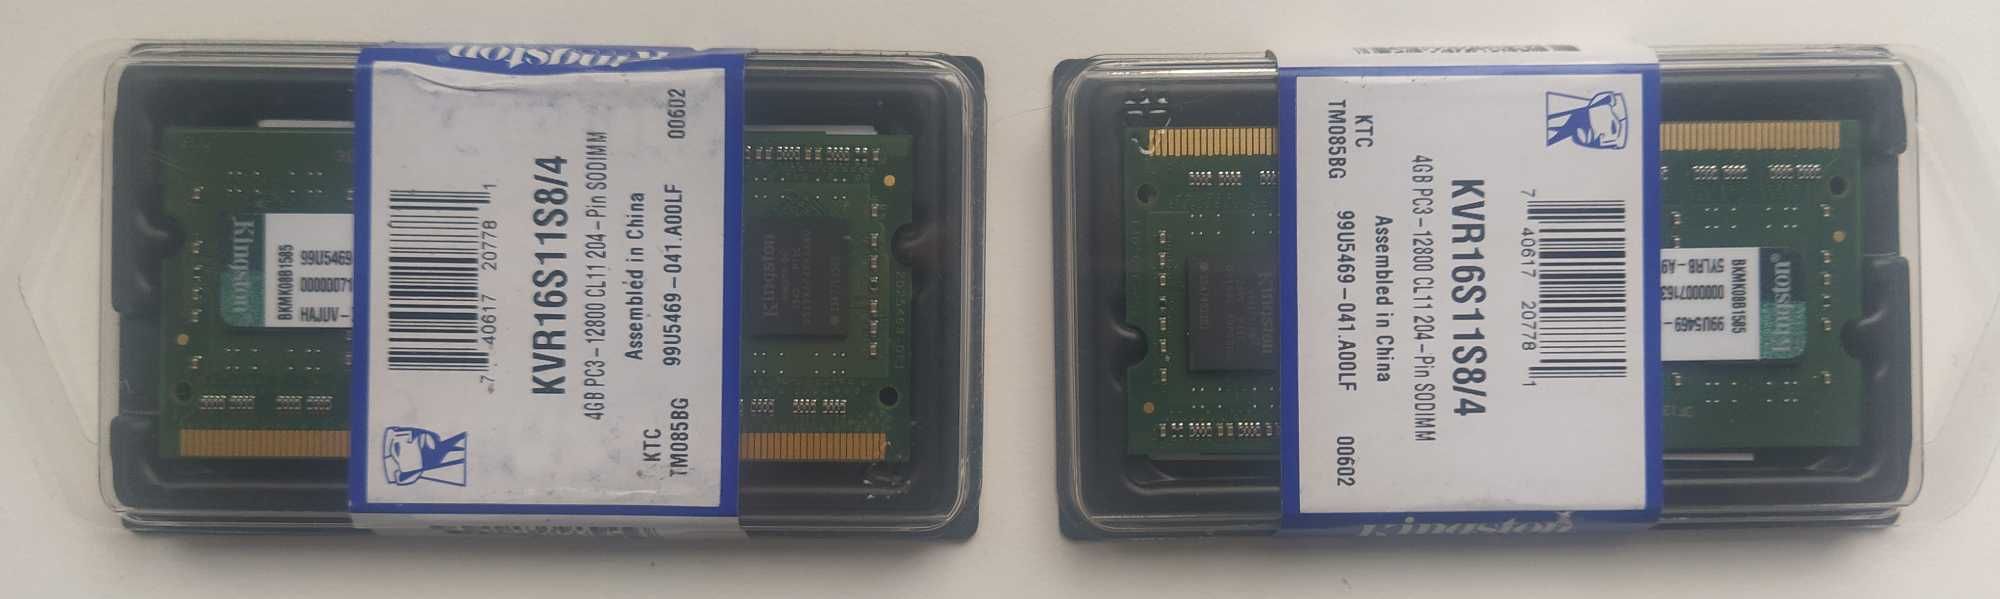 Модуль памяти Kingston 4 GB SODIMM DDR3 1600 MHz (KVR16S11S8/4) 1.5V